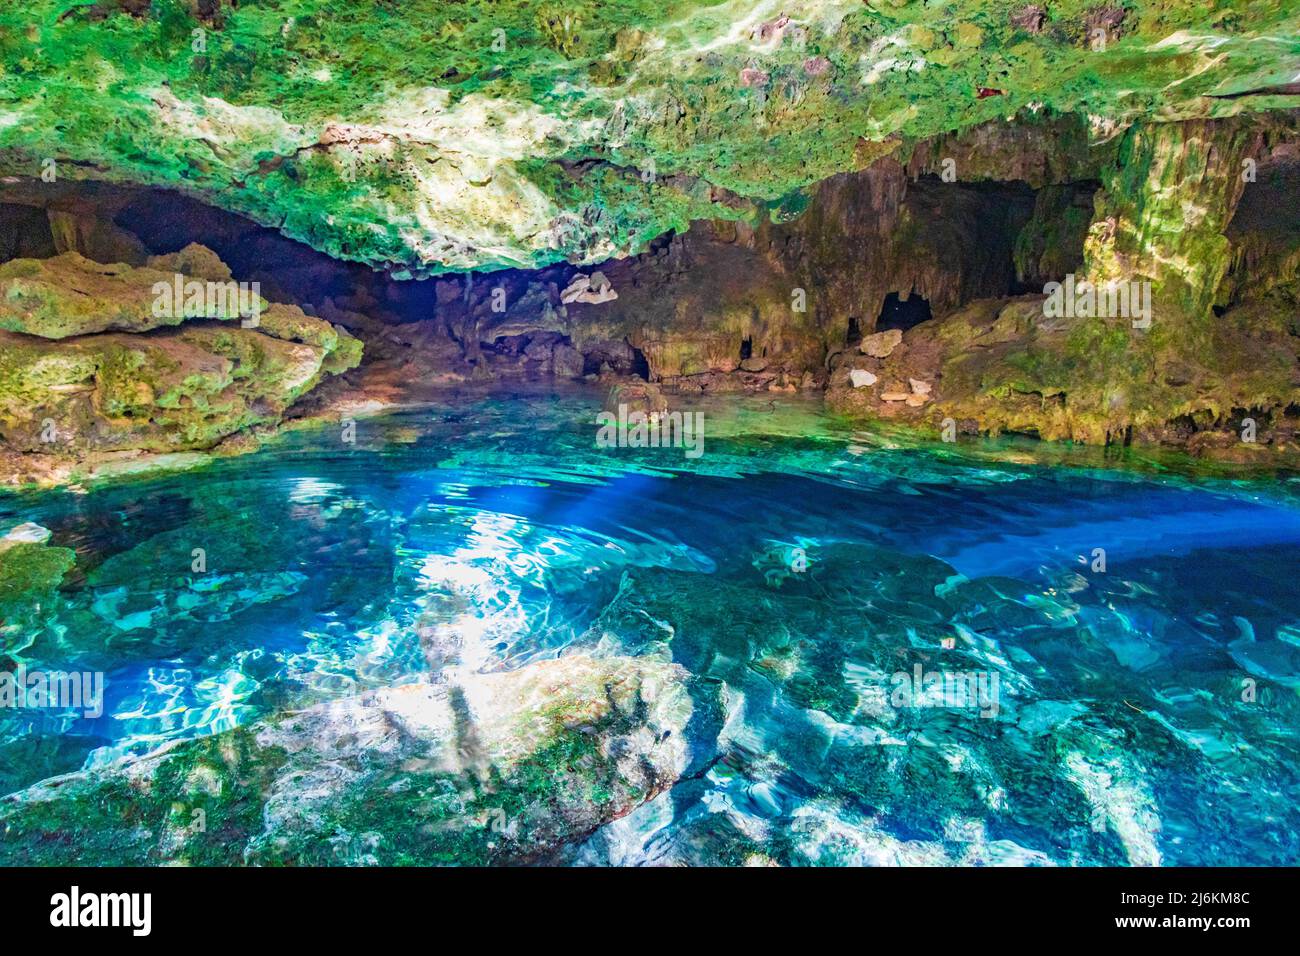 https://c8.alamy.com/comp/2J6KM8C/amazing-blue-turquoise-water-and-limestone-cave-sinkhole-cenote-tajma-ha-tajmaha-in-puerto-aventuras-quintana-roo-mexico-2J6KM8C.jpg